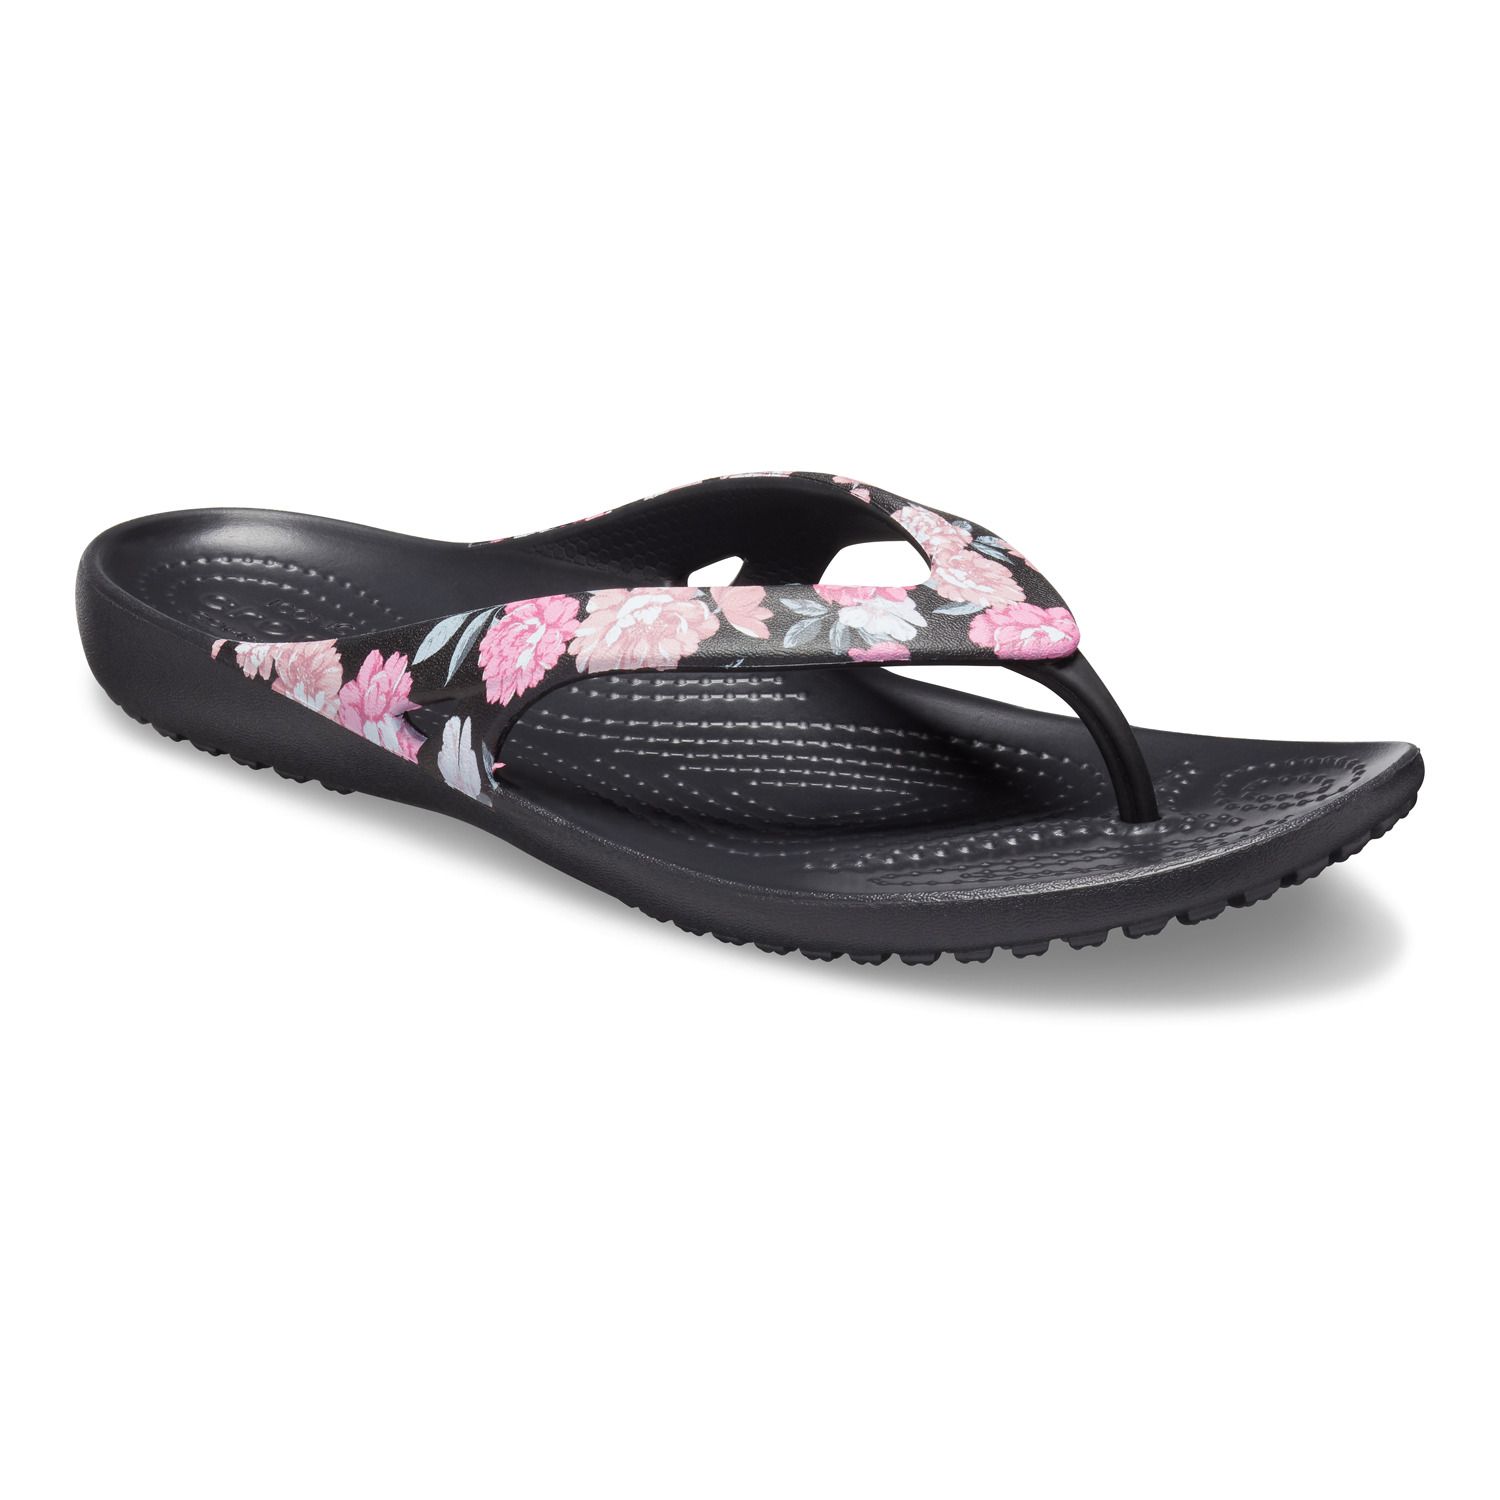 crocs floral sandals